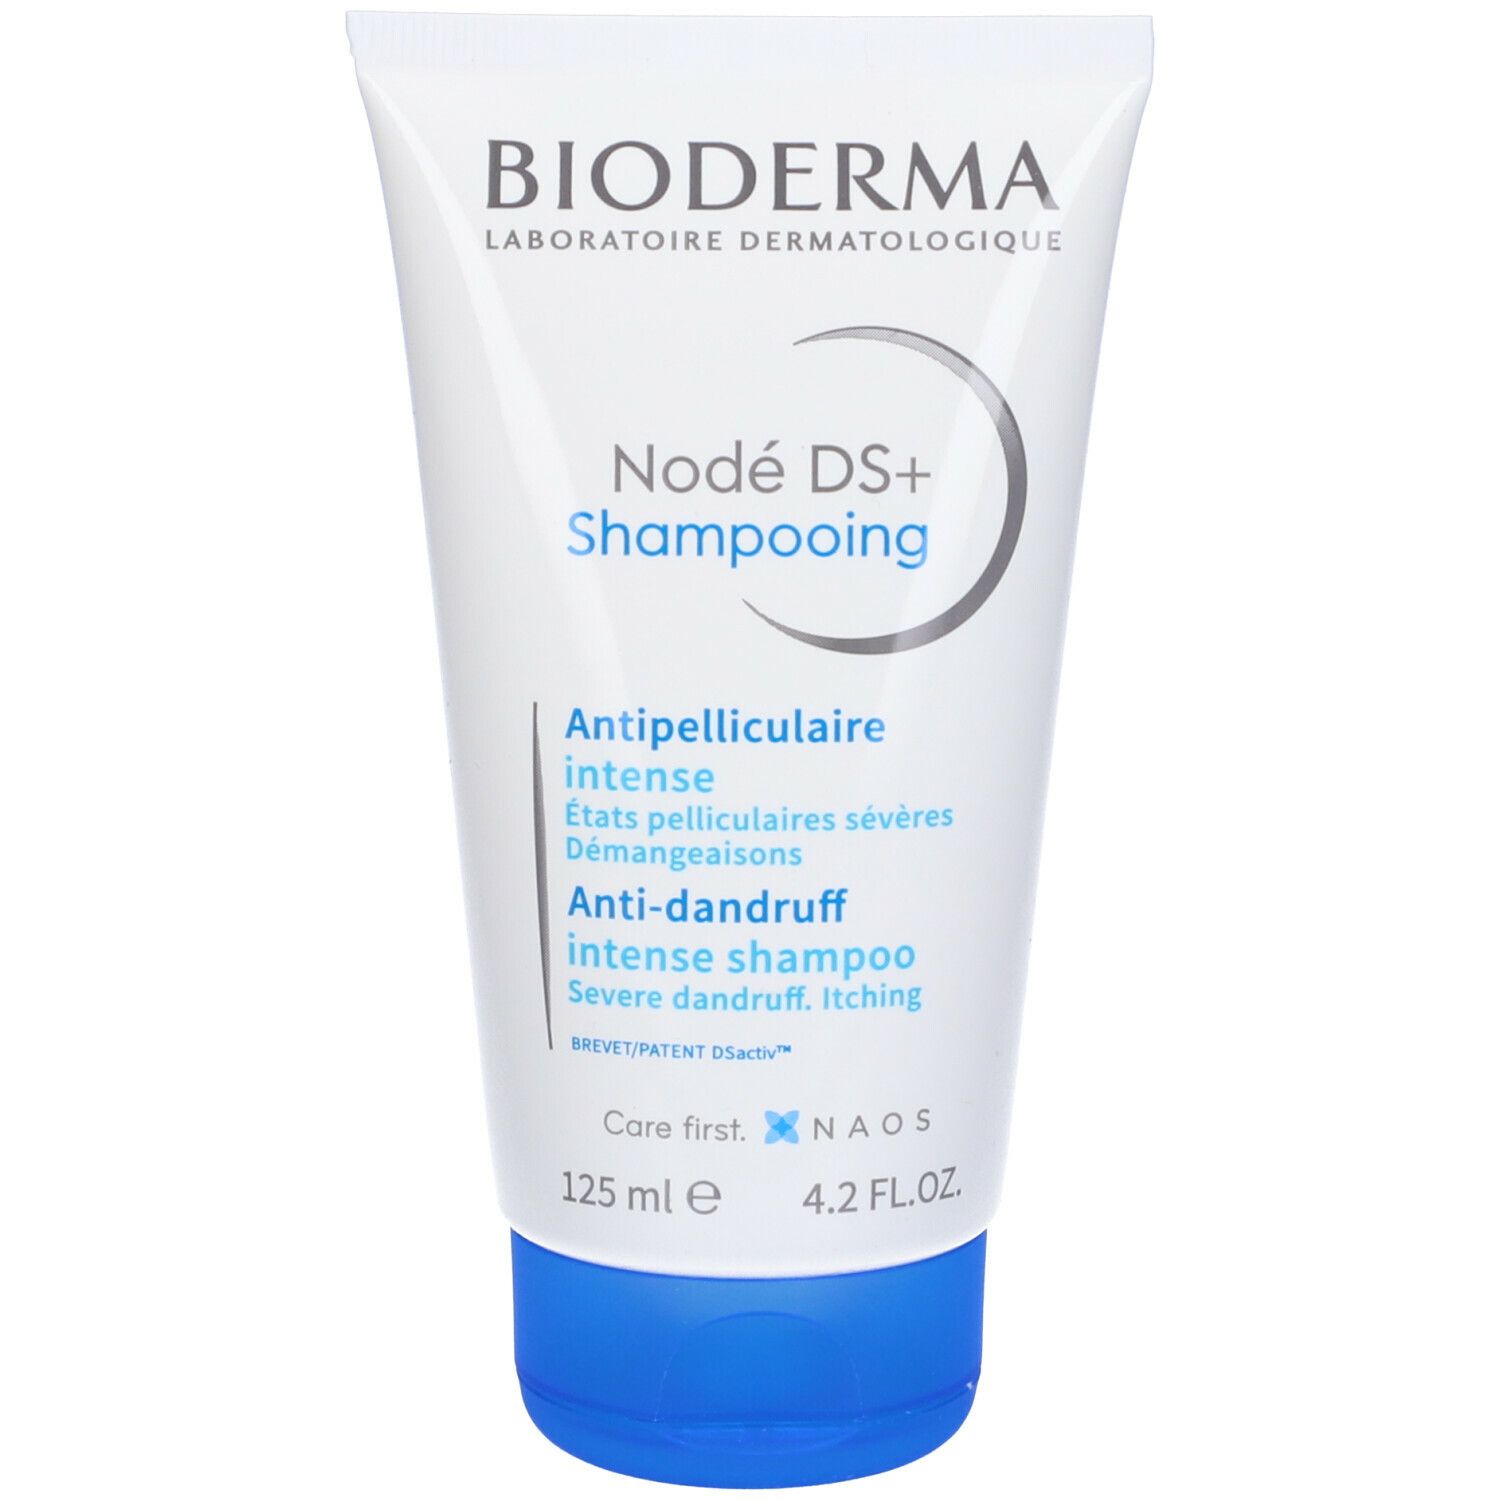 BIODERMA Nodé DS+ shampoo antiforfora dermatite seborroica